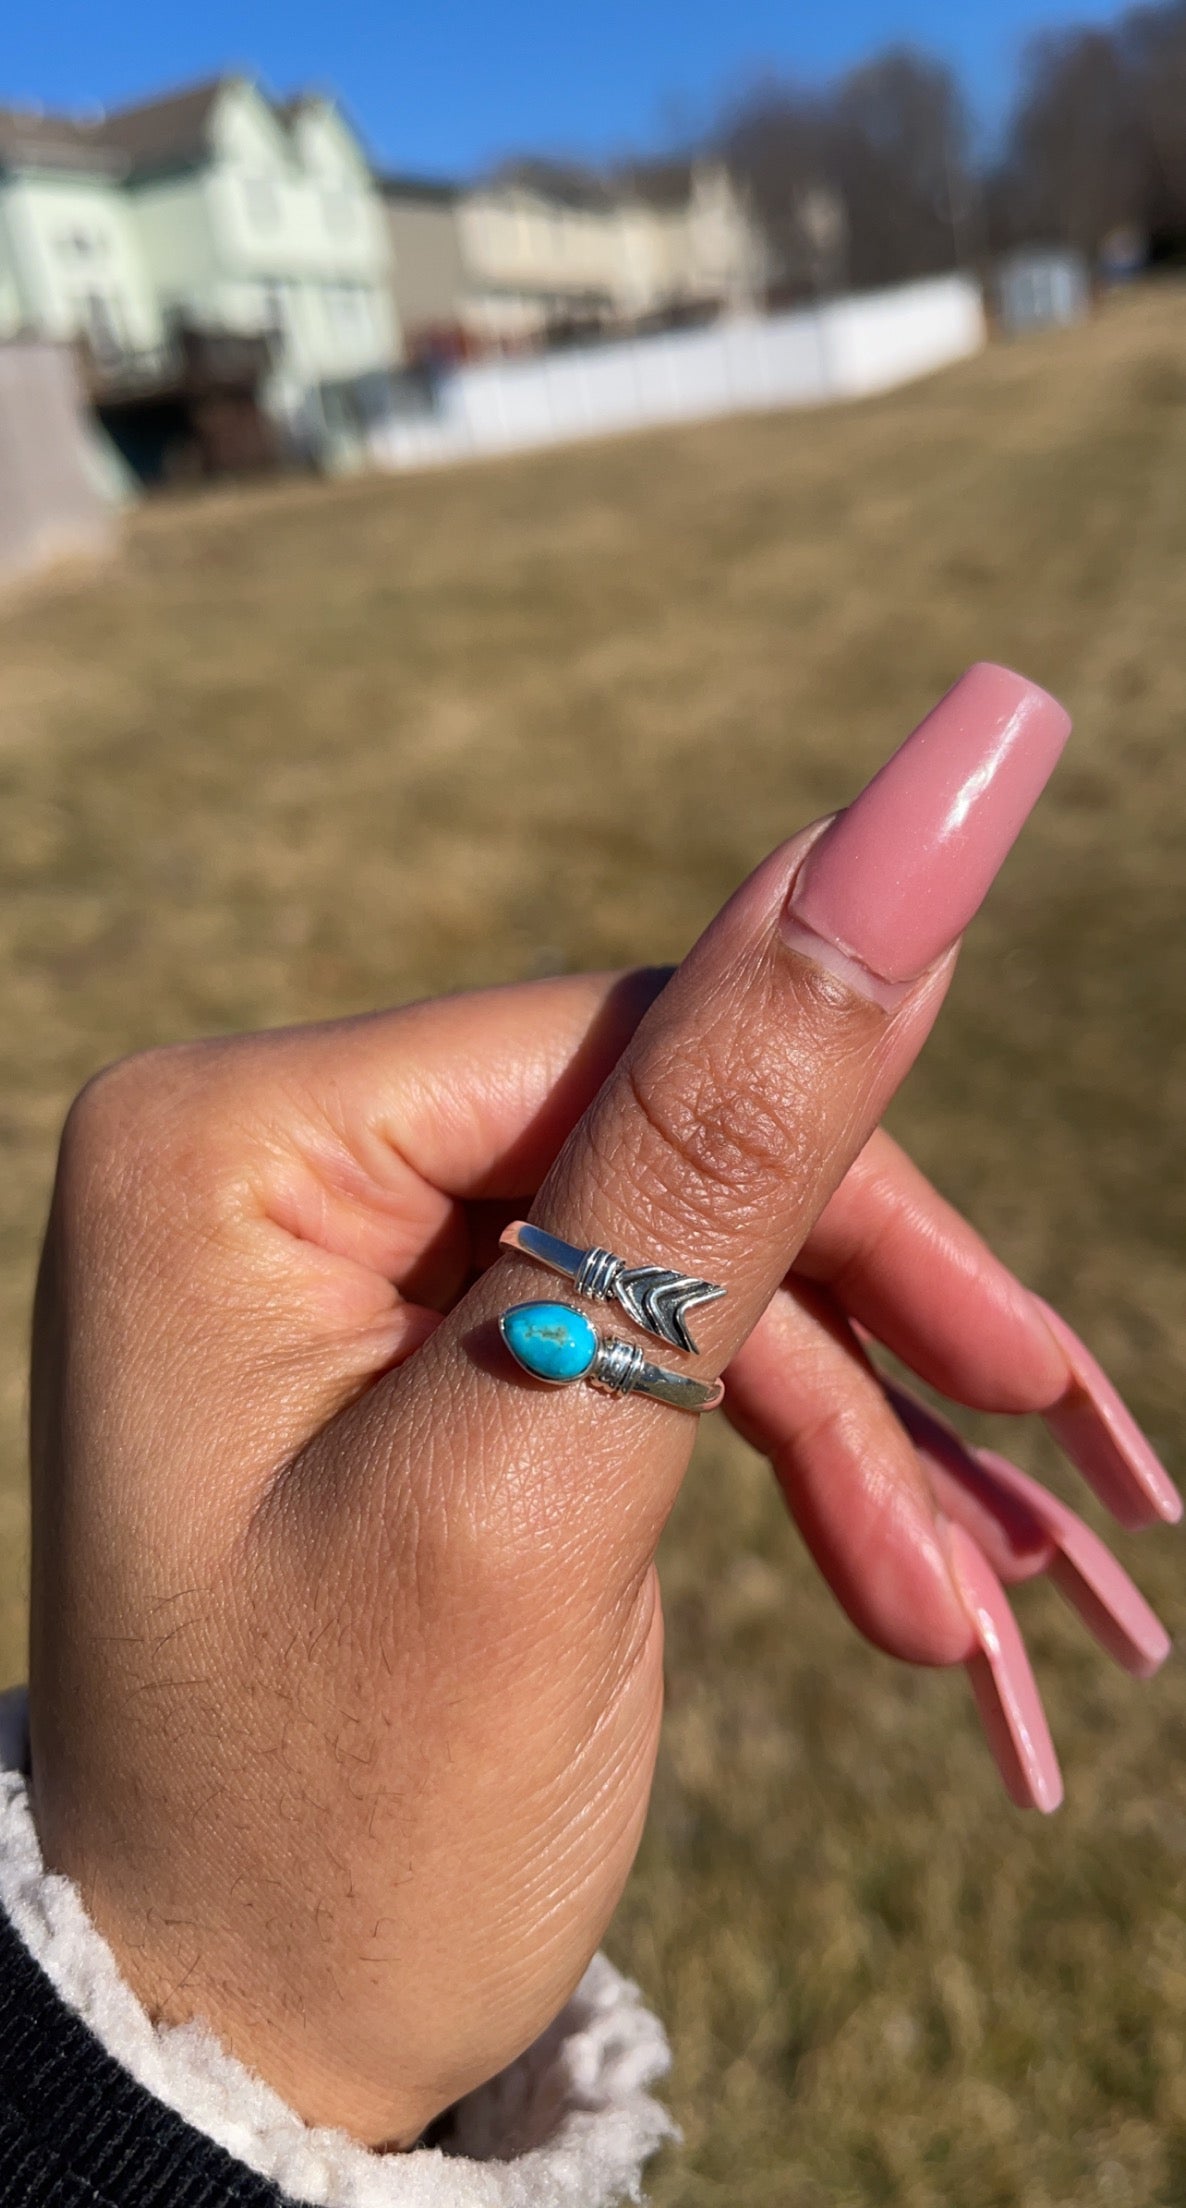 Native Ring